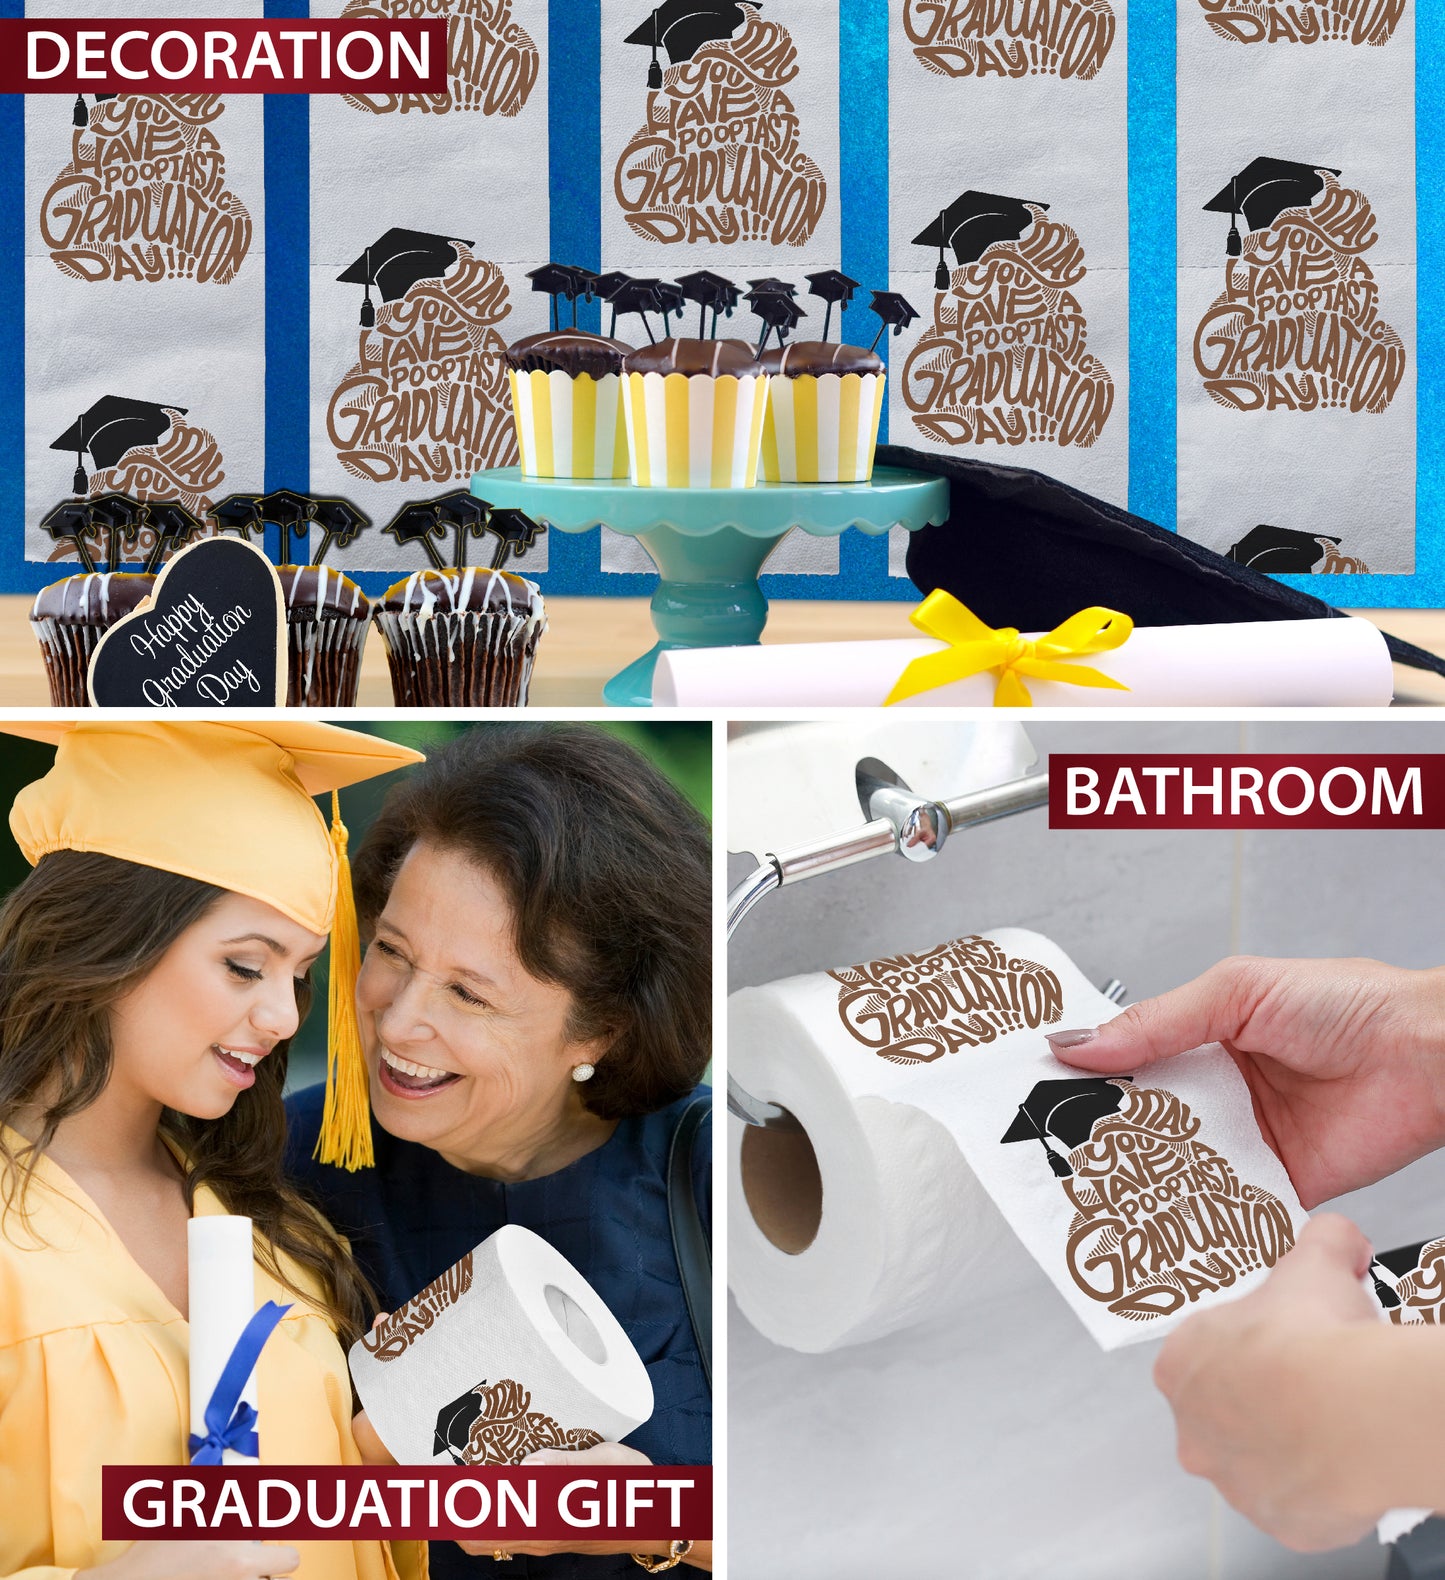 Printed TP May You Have a Pooptastic Graduation Printed Toilet Paper 500 Sheets